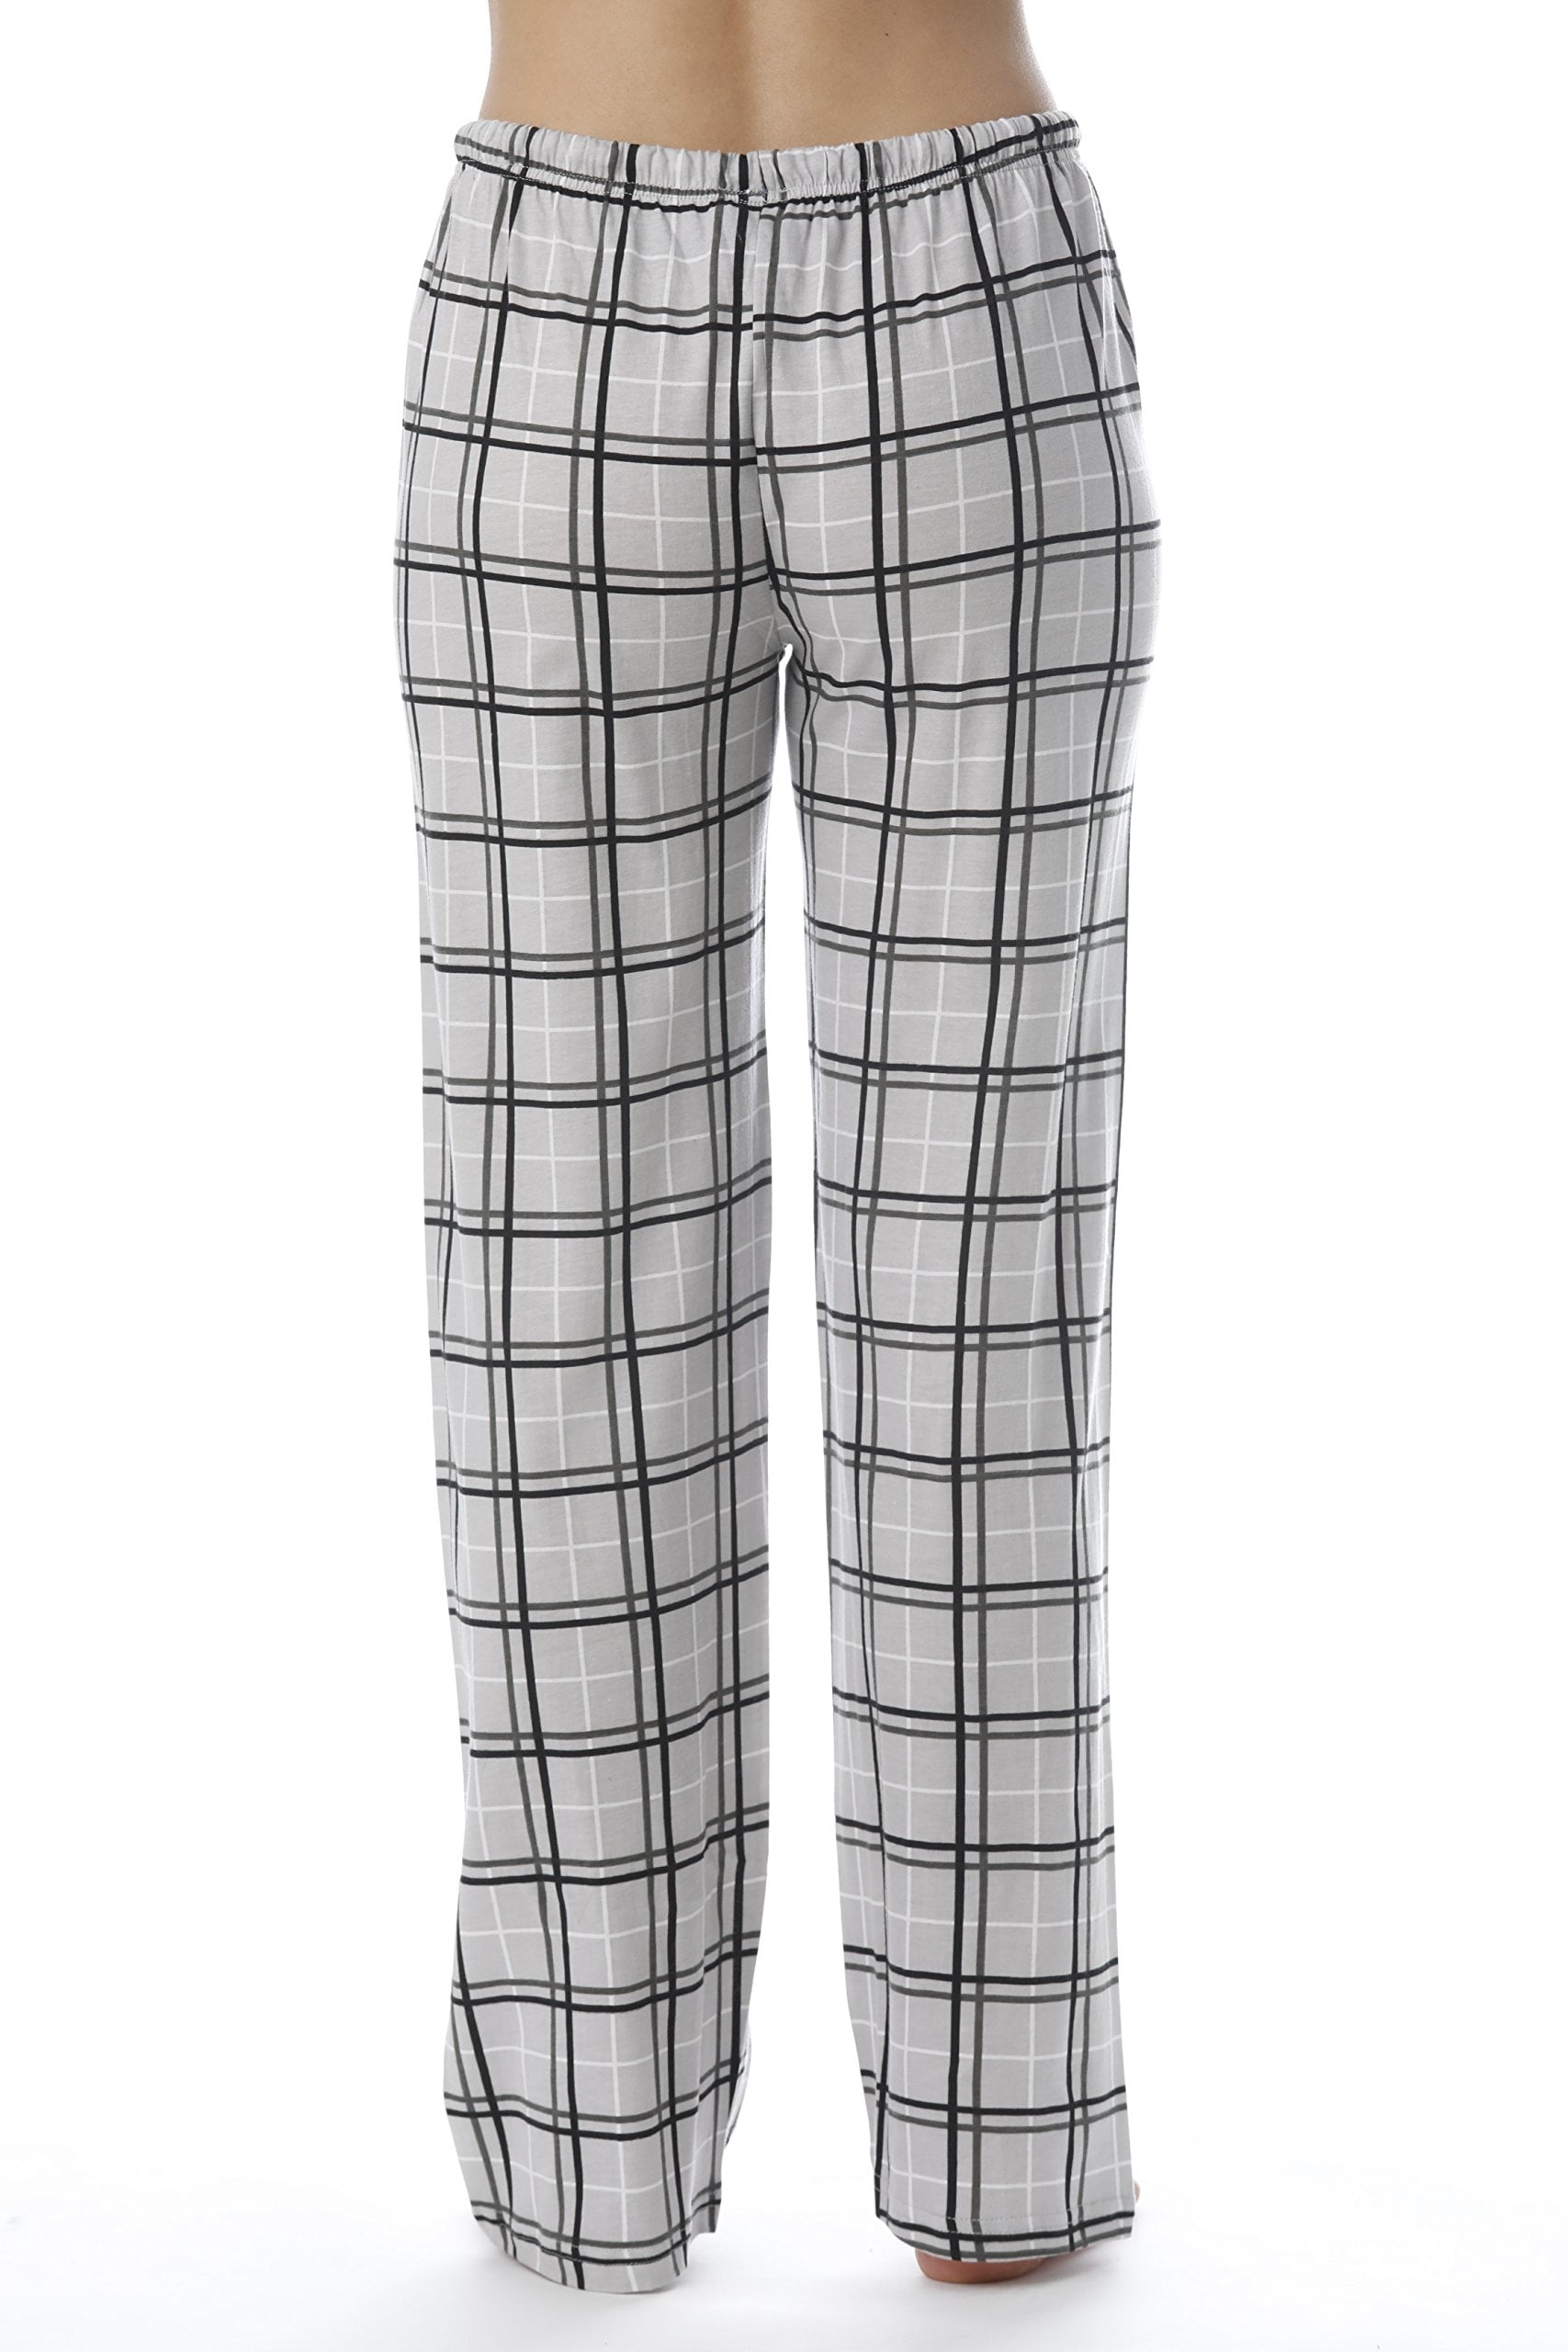 Just Love Women Plaid Pajama Pants Sleepwear 6324-COR-10281